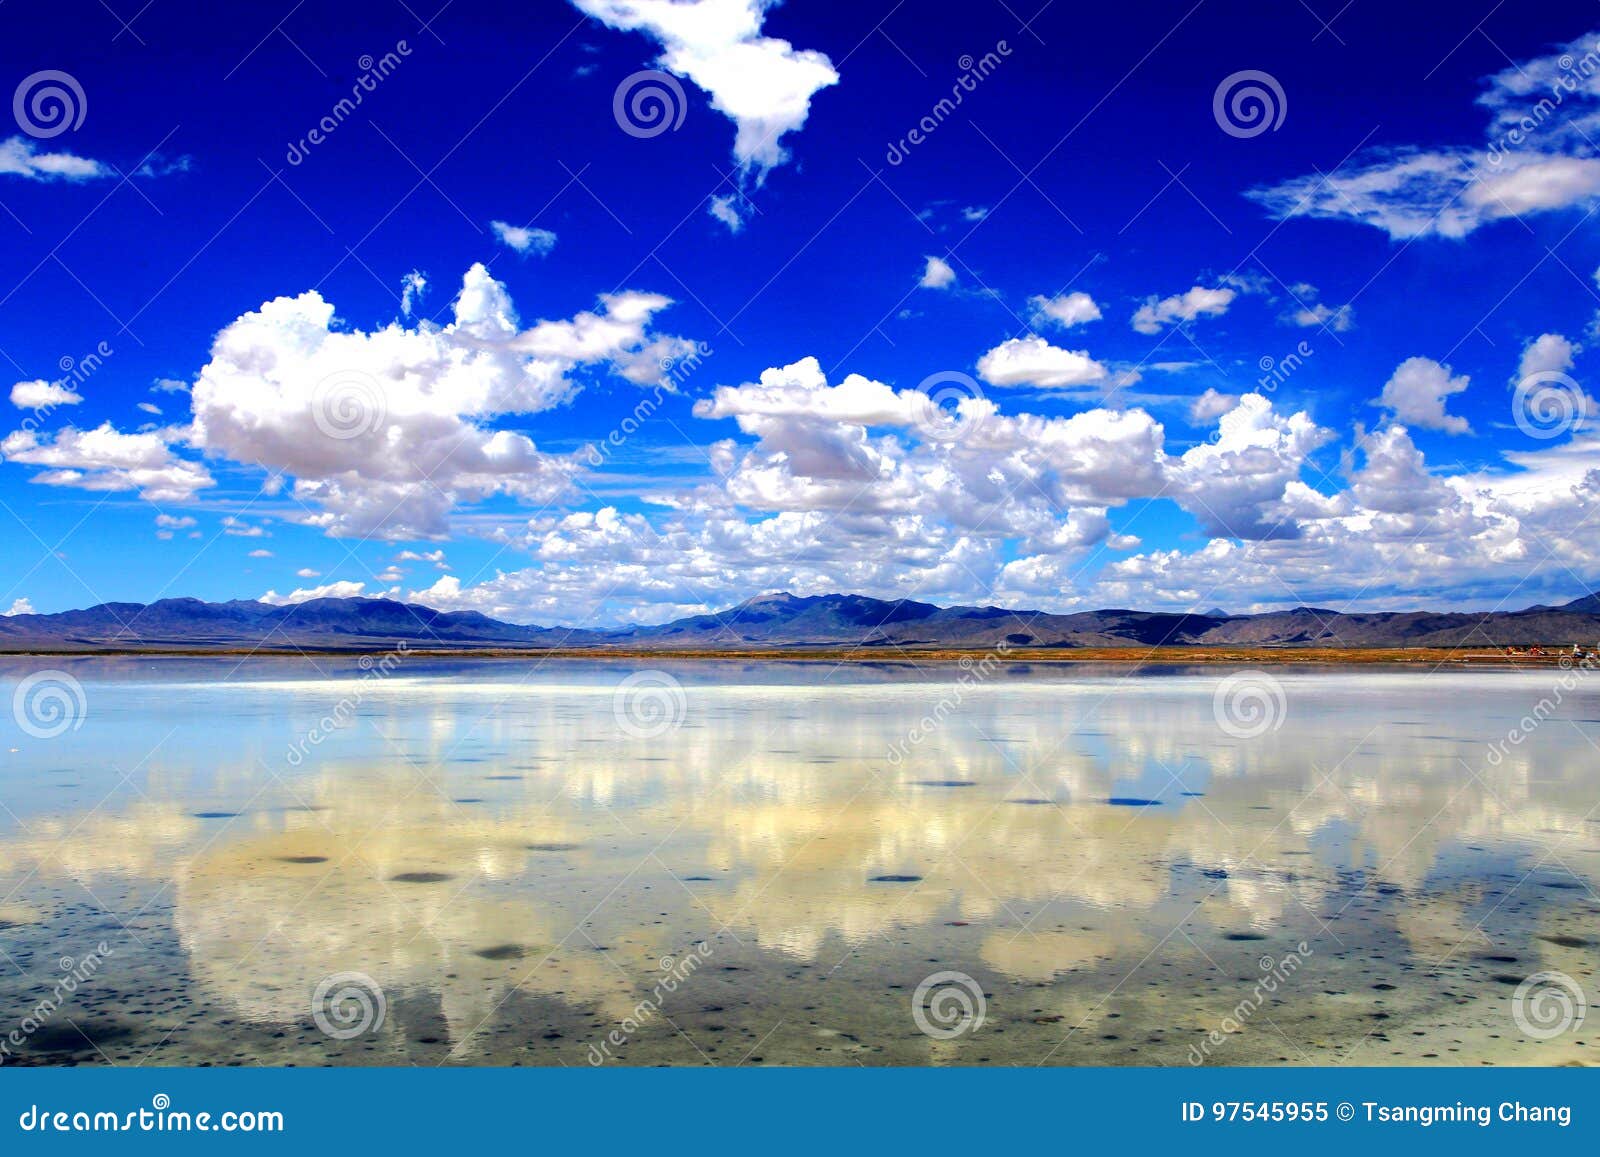 qinghai chaka salt lake scenery